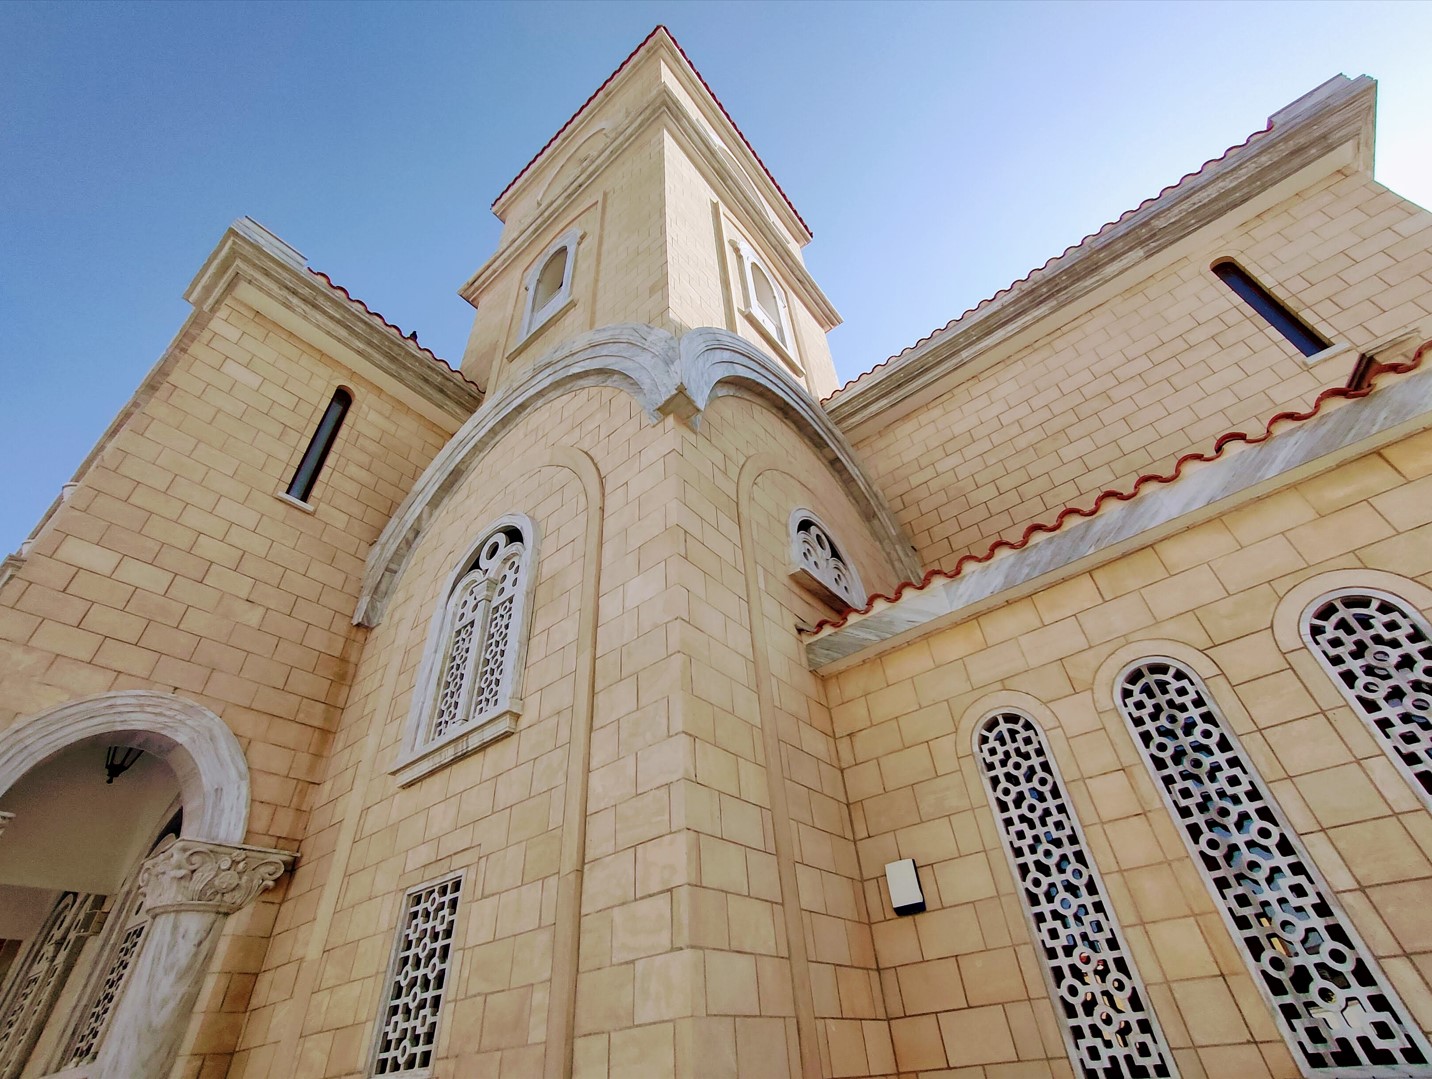 Saint John's Cathedral in Nicosia (Lefkosia), Cyprus